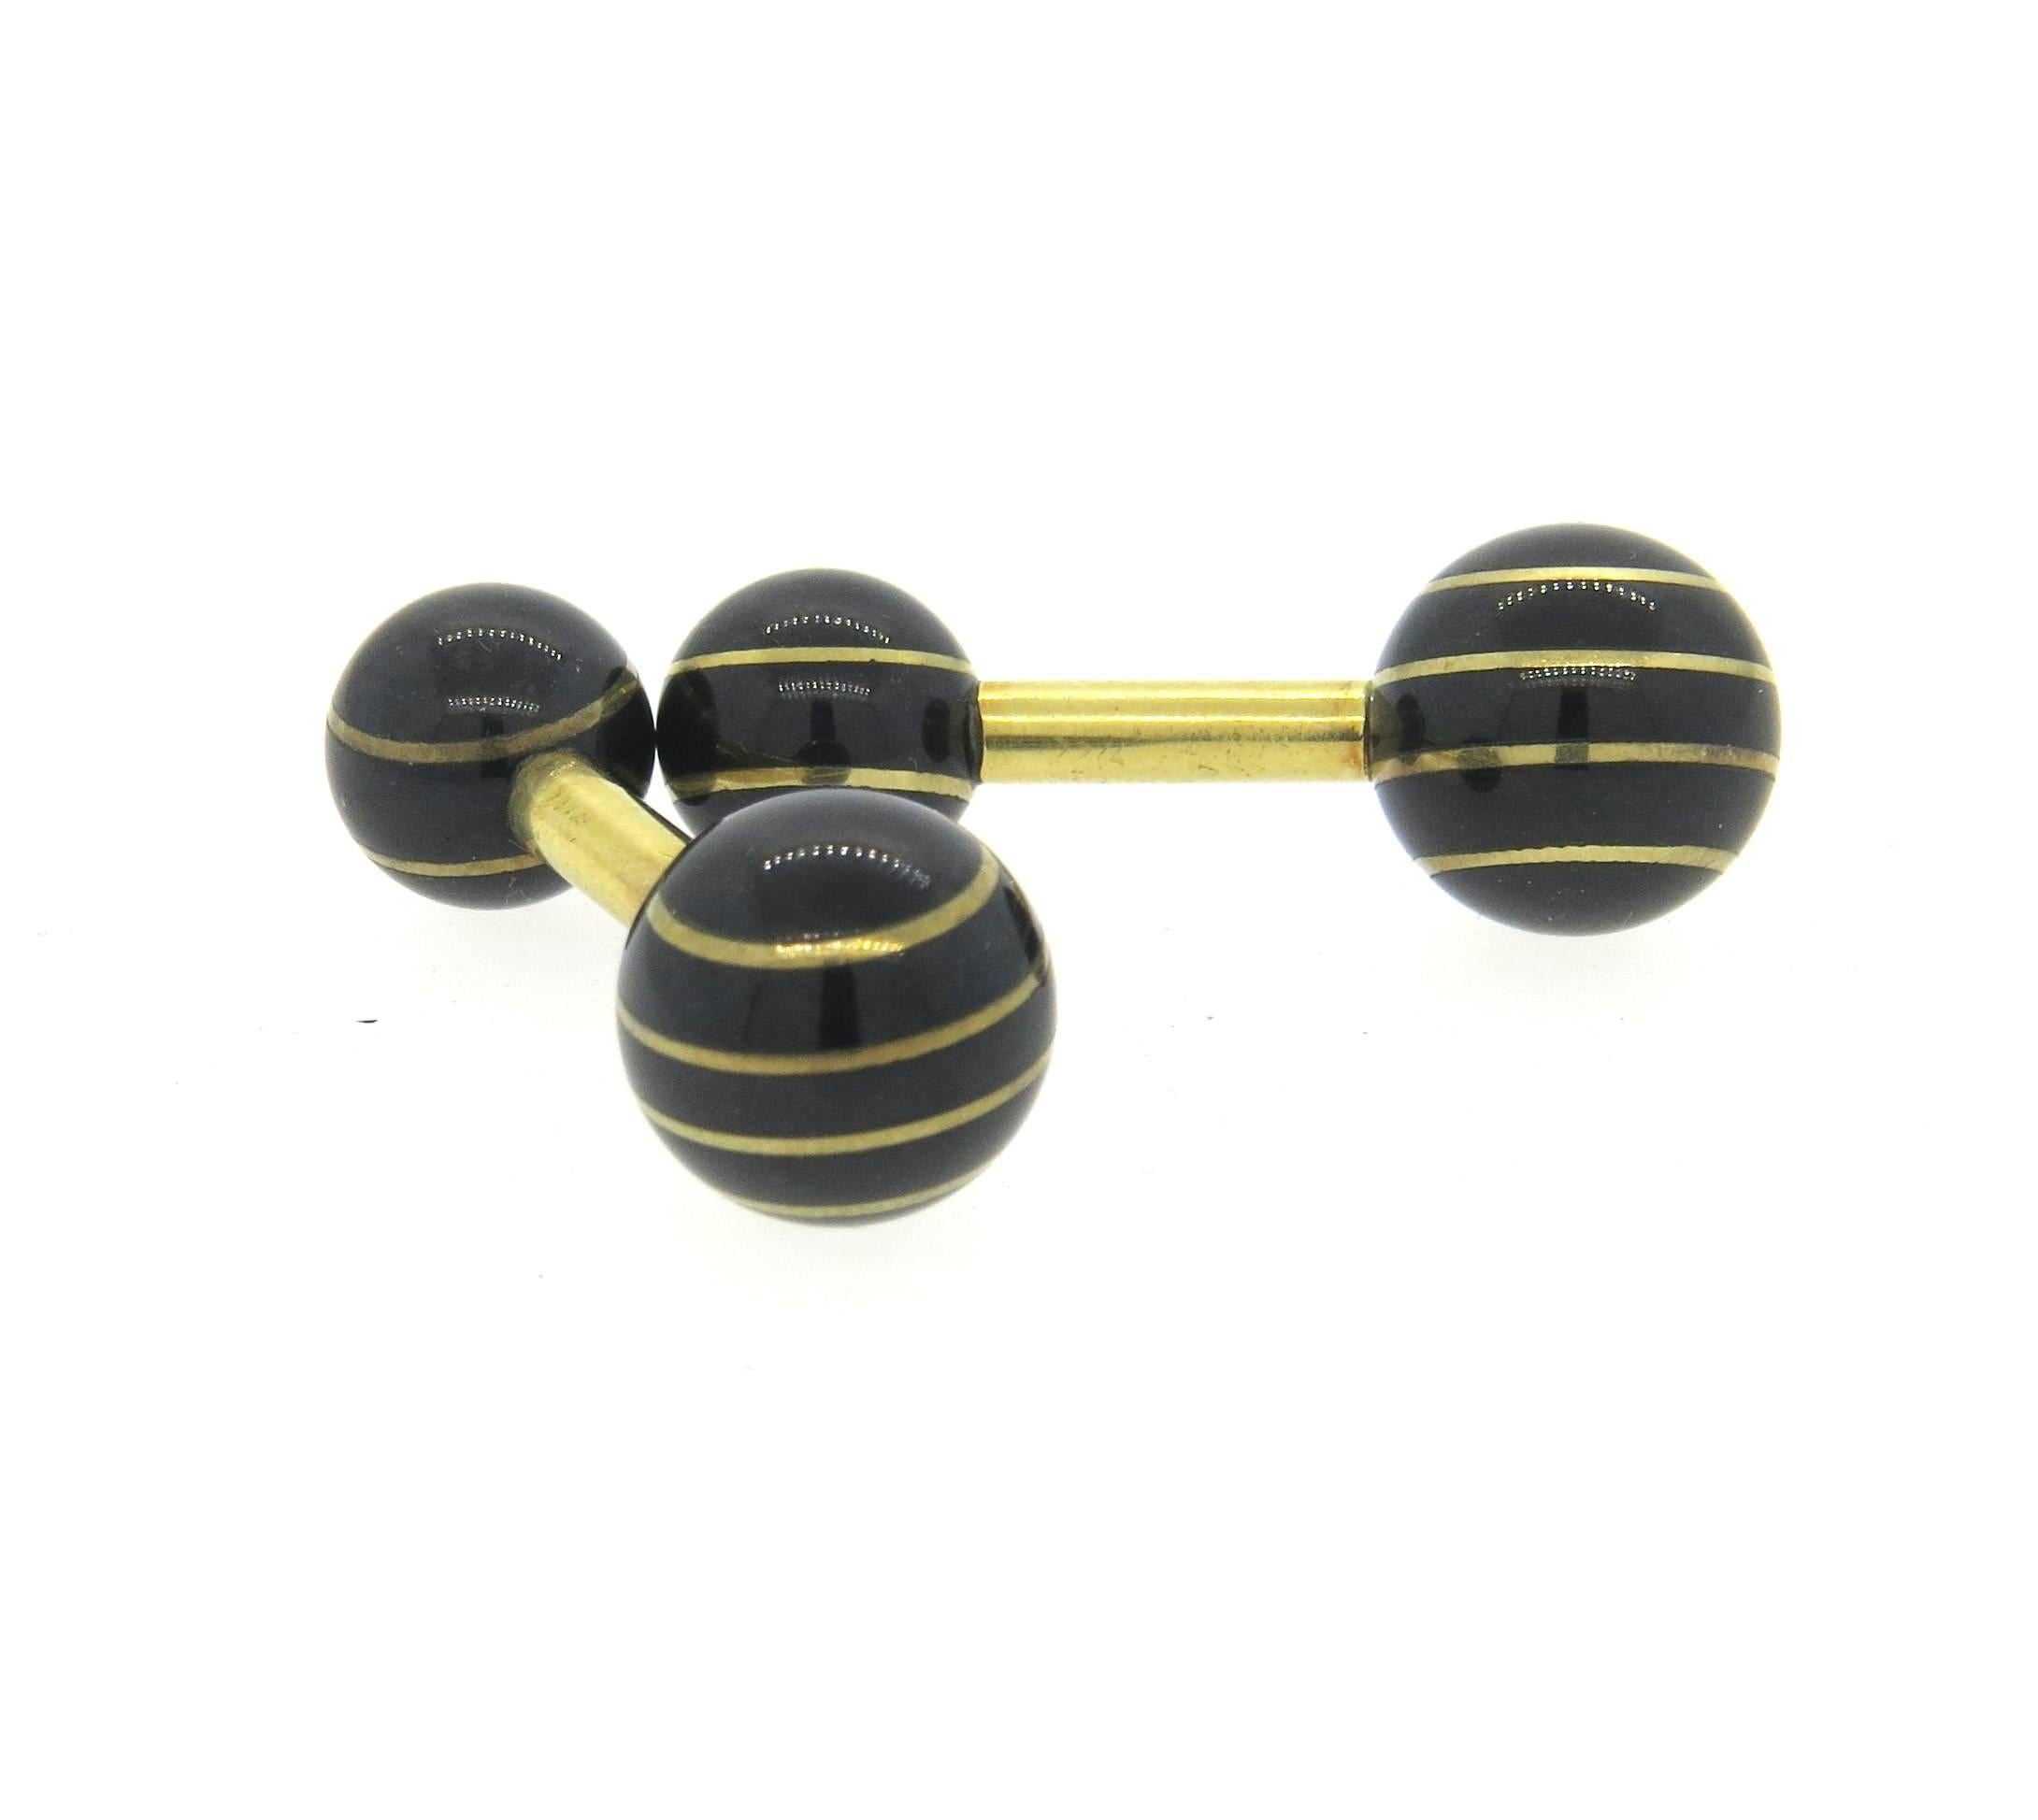 18k yellow gold dumbbell cufflinks, set with black jade stones. Top measures 11.5mm in diameter, back - 9.2mm in diameter. Weight - 10.1 grams